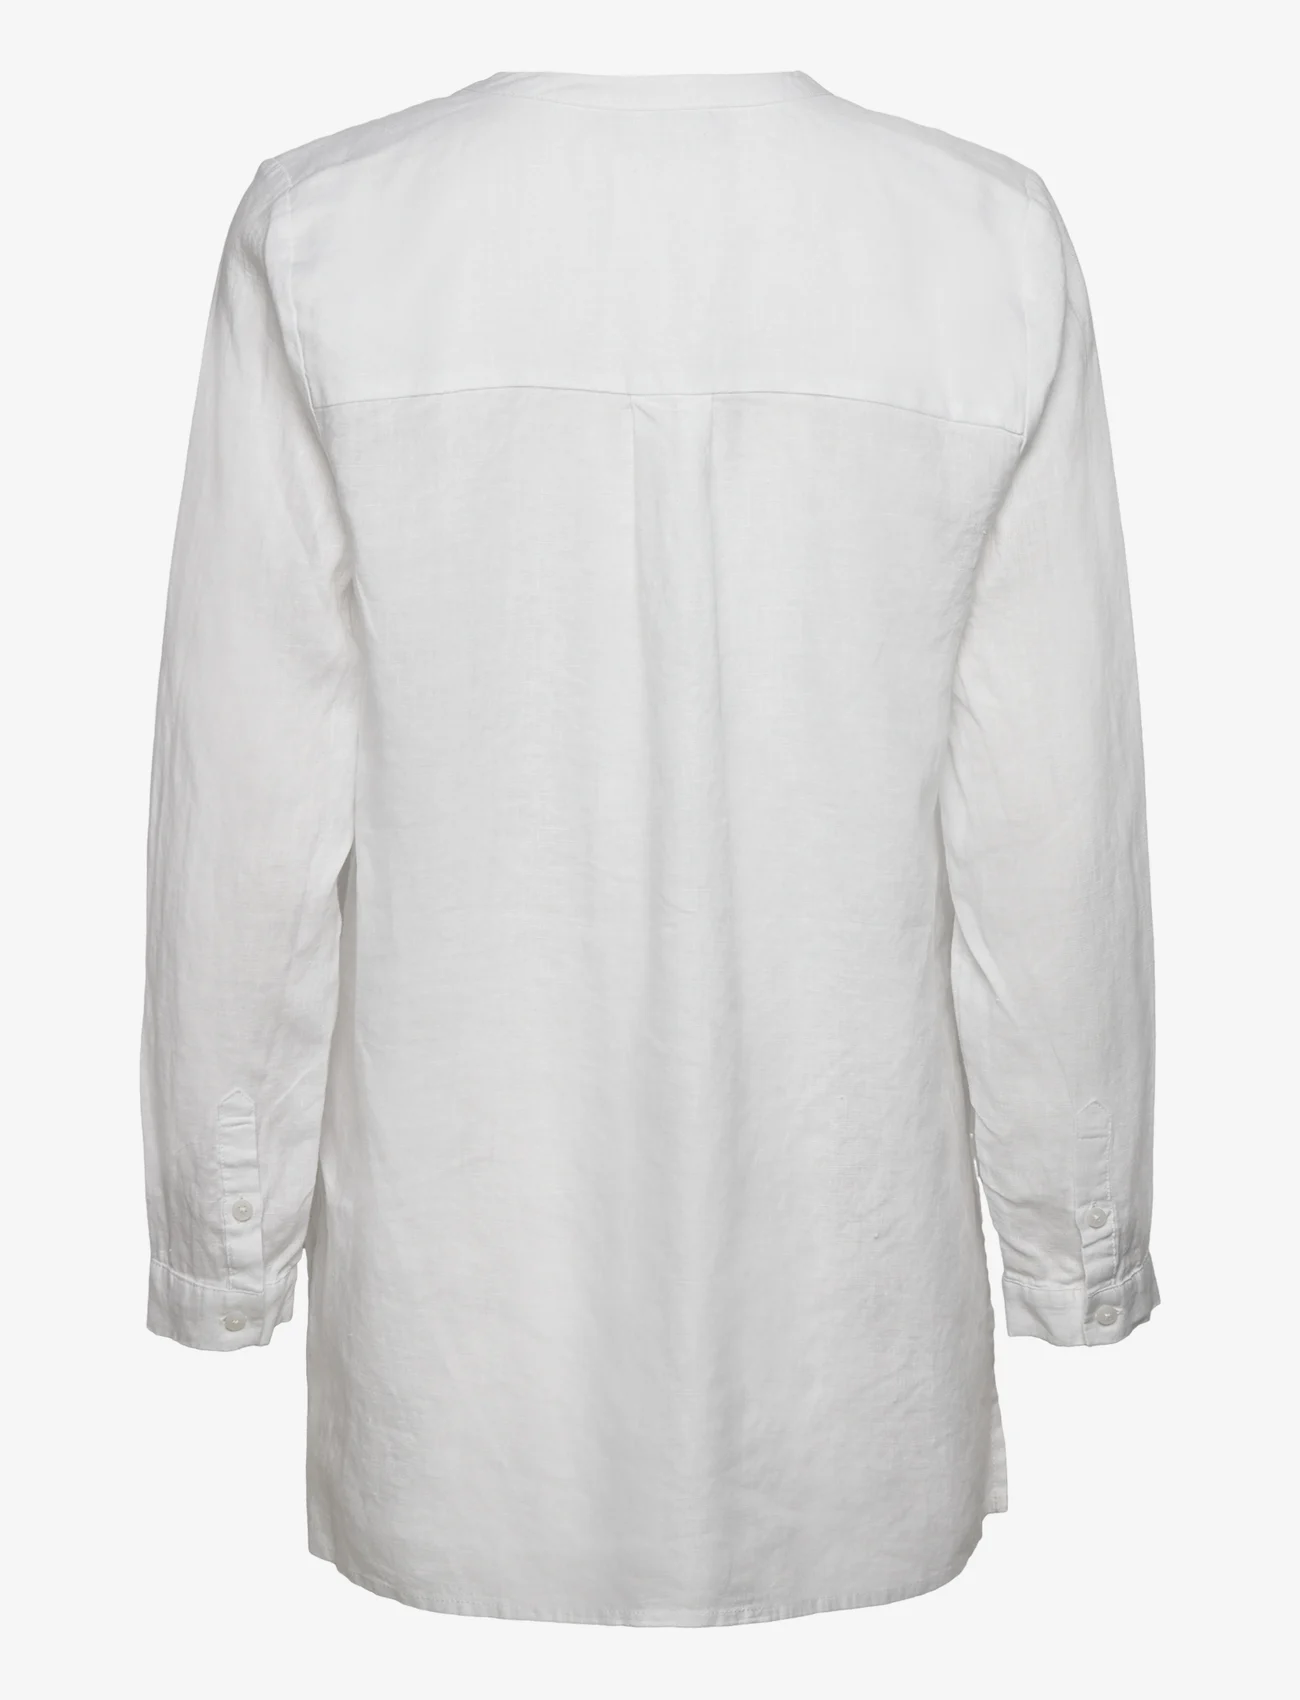 Masai - Gemi - long-sleeved shirts - white - 1